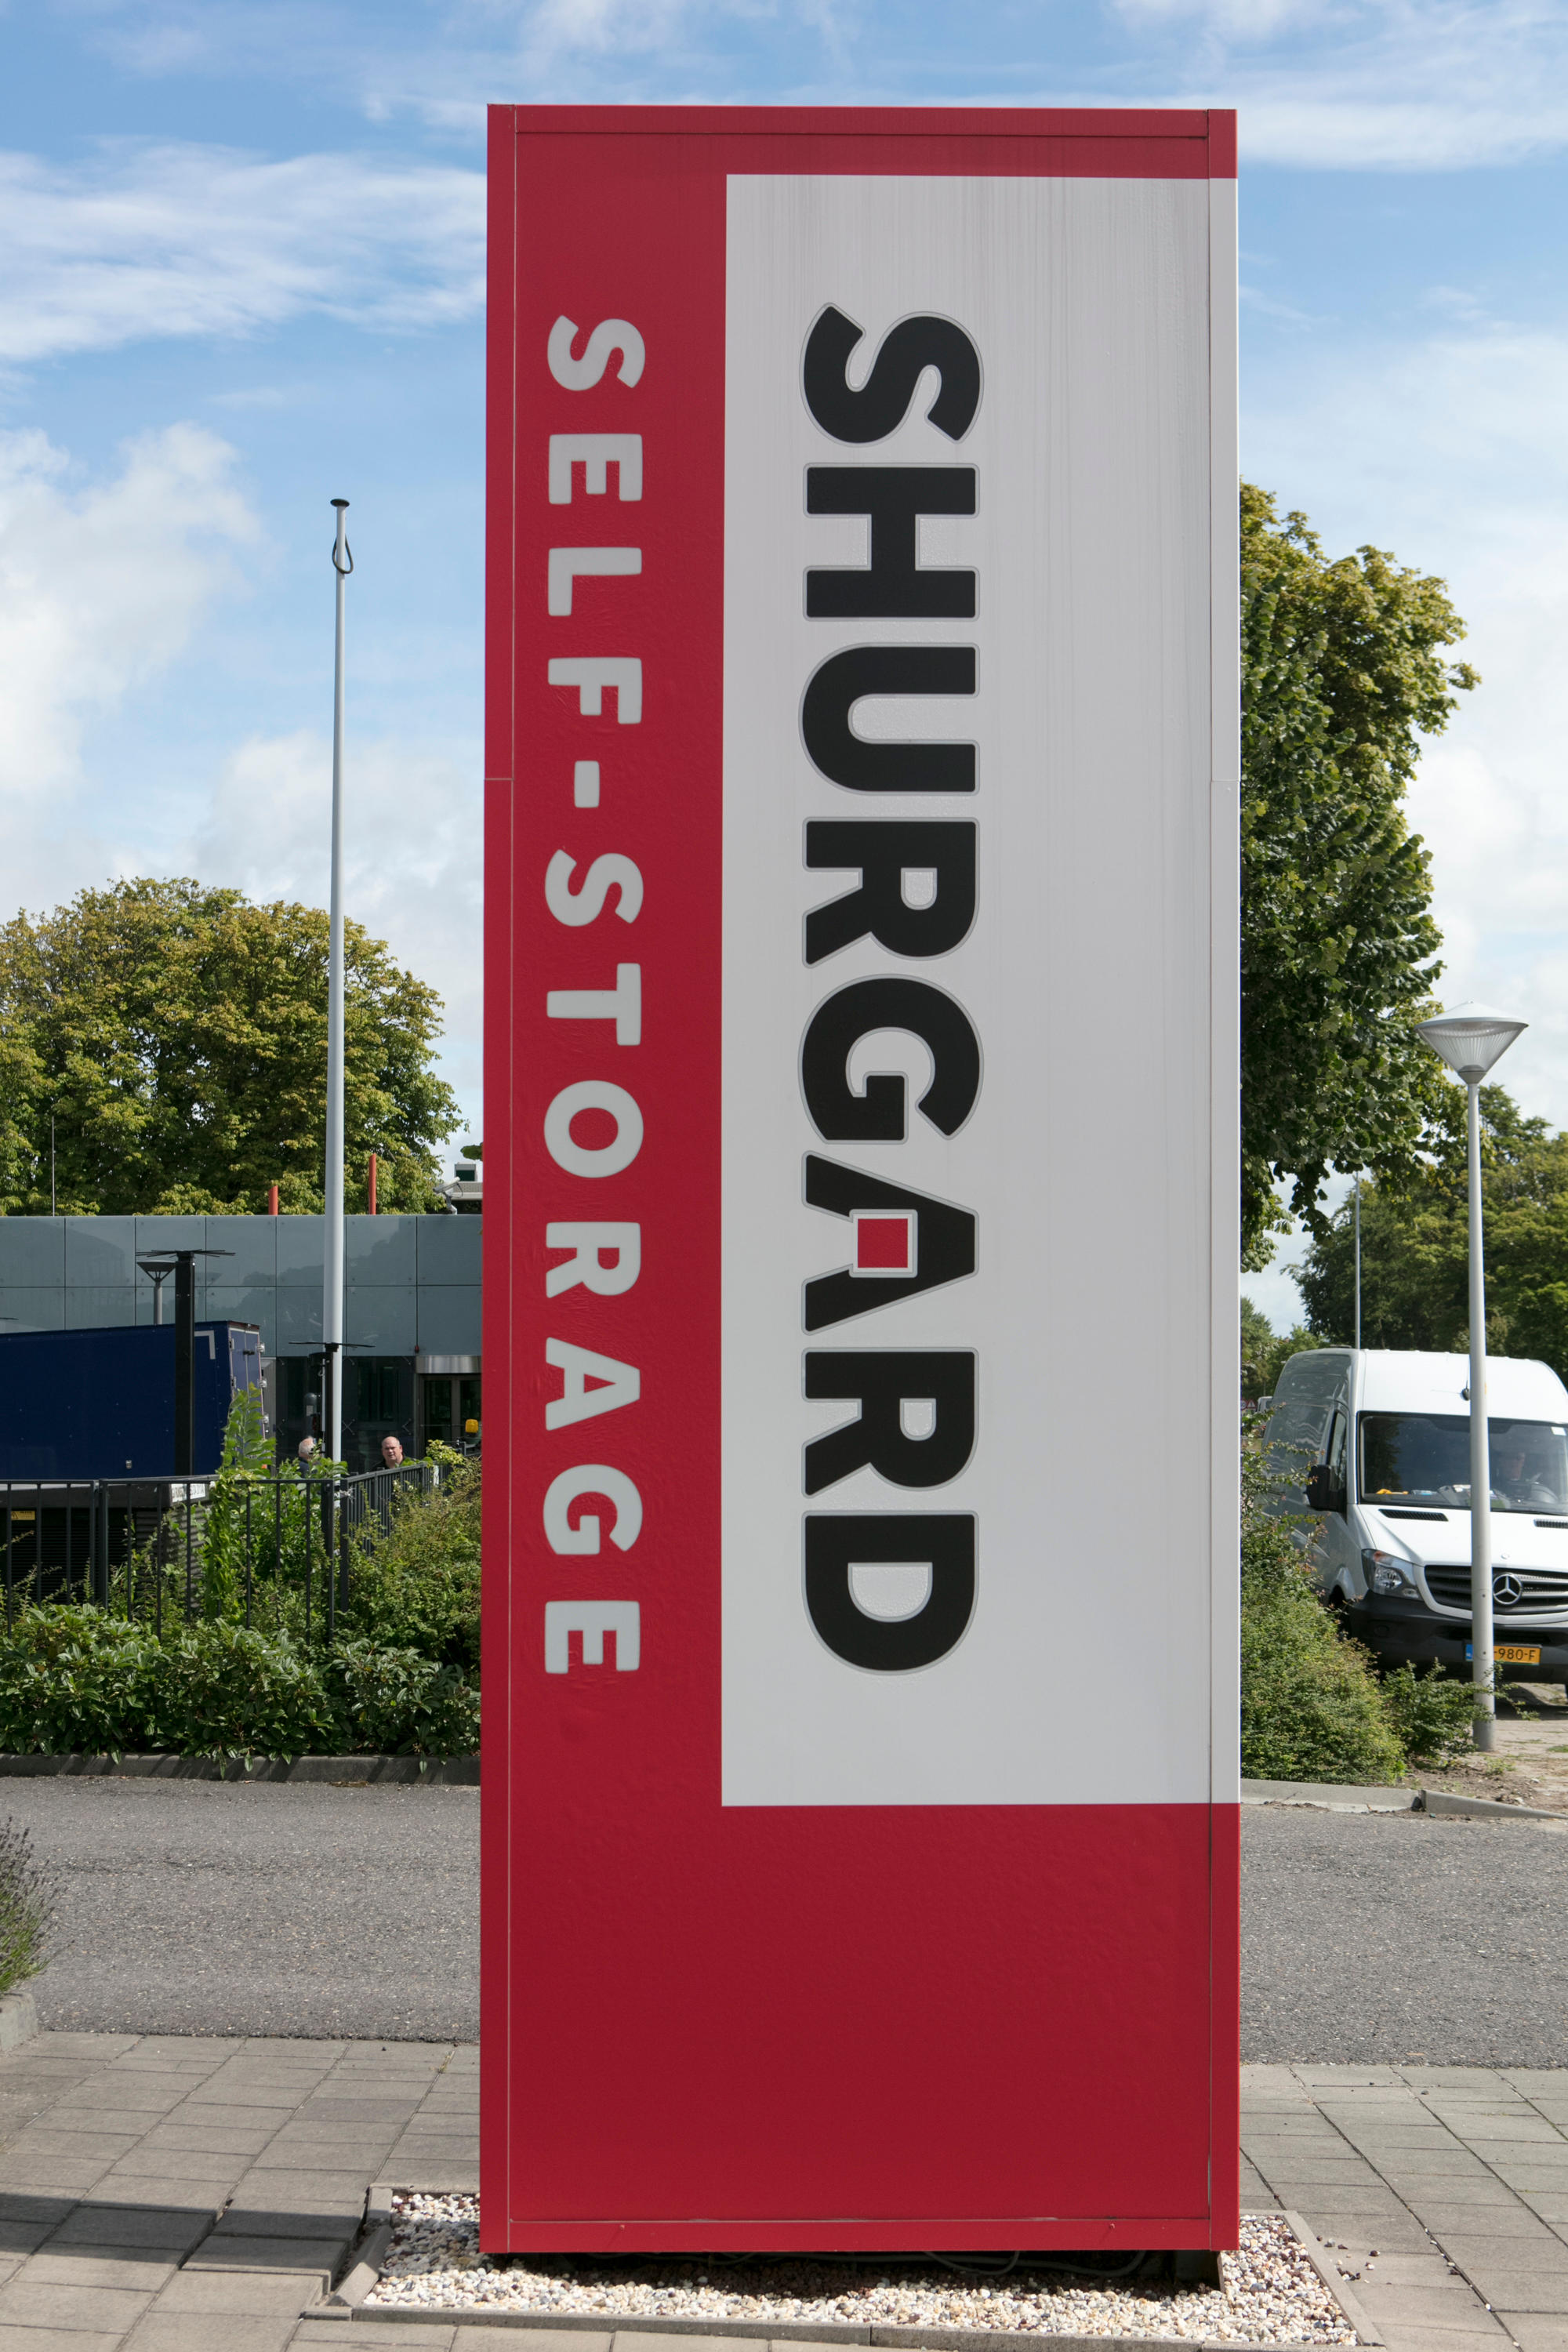 Foto's Shurgard Self Storage Wassenaar